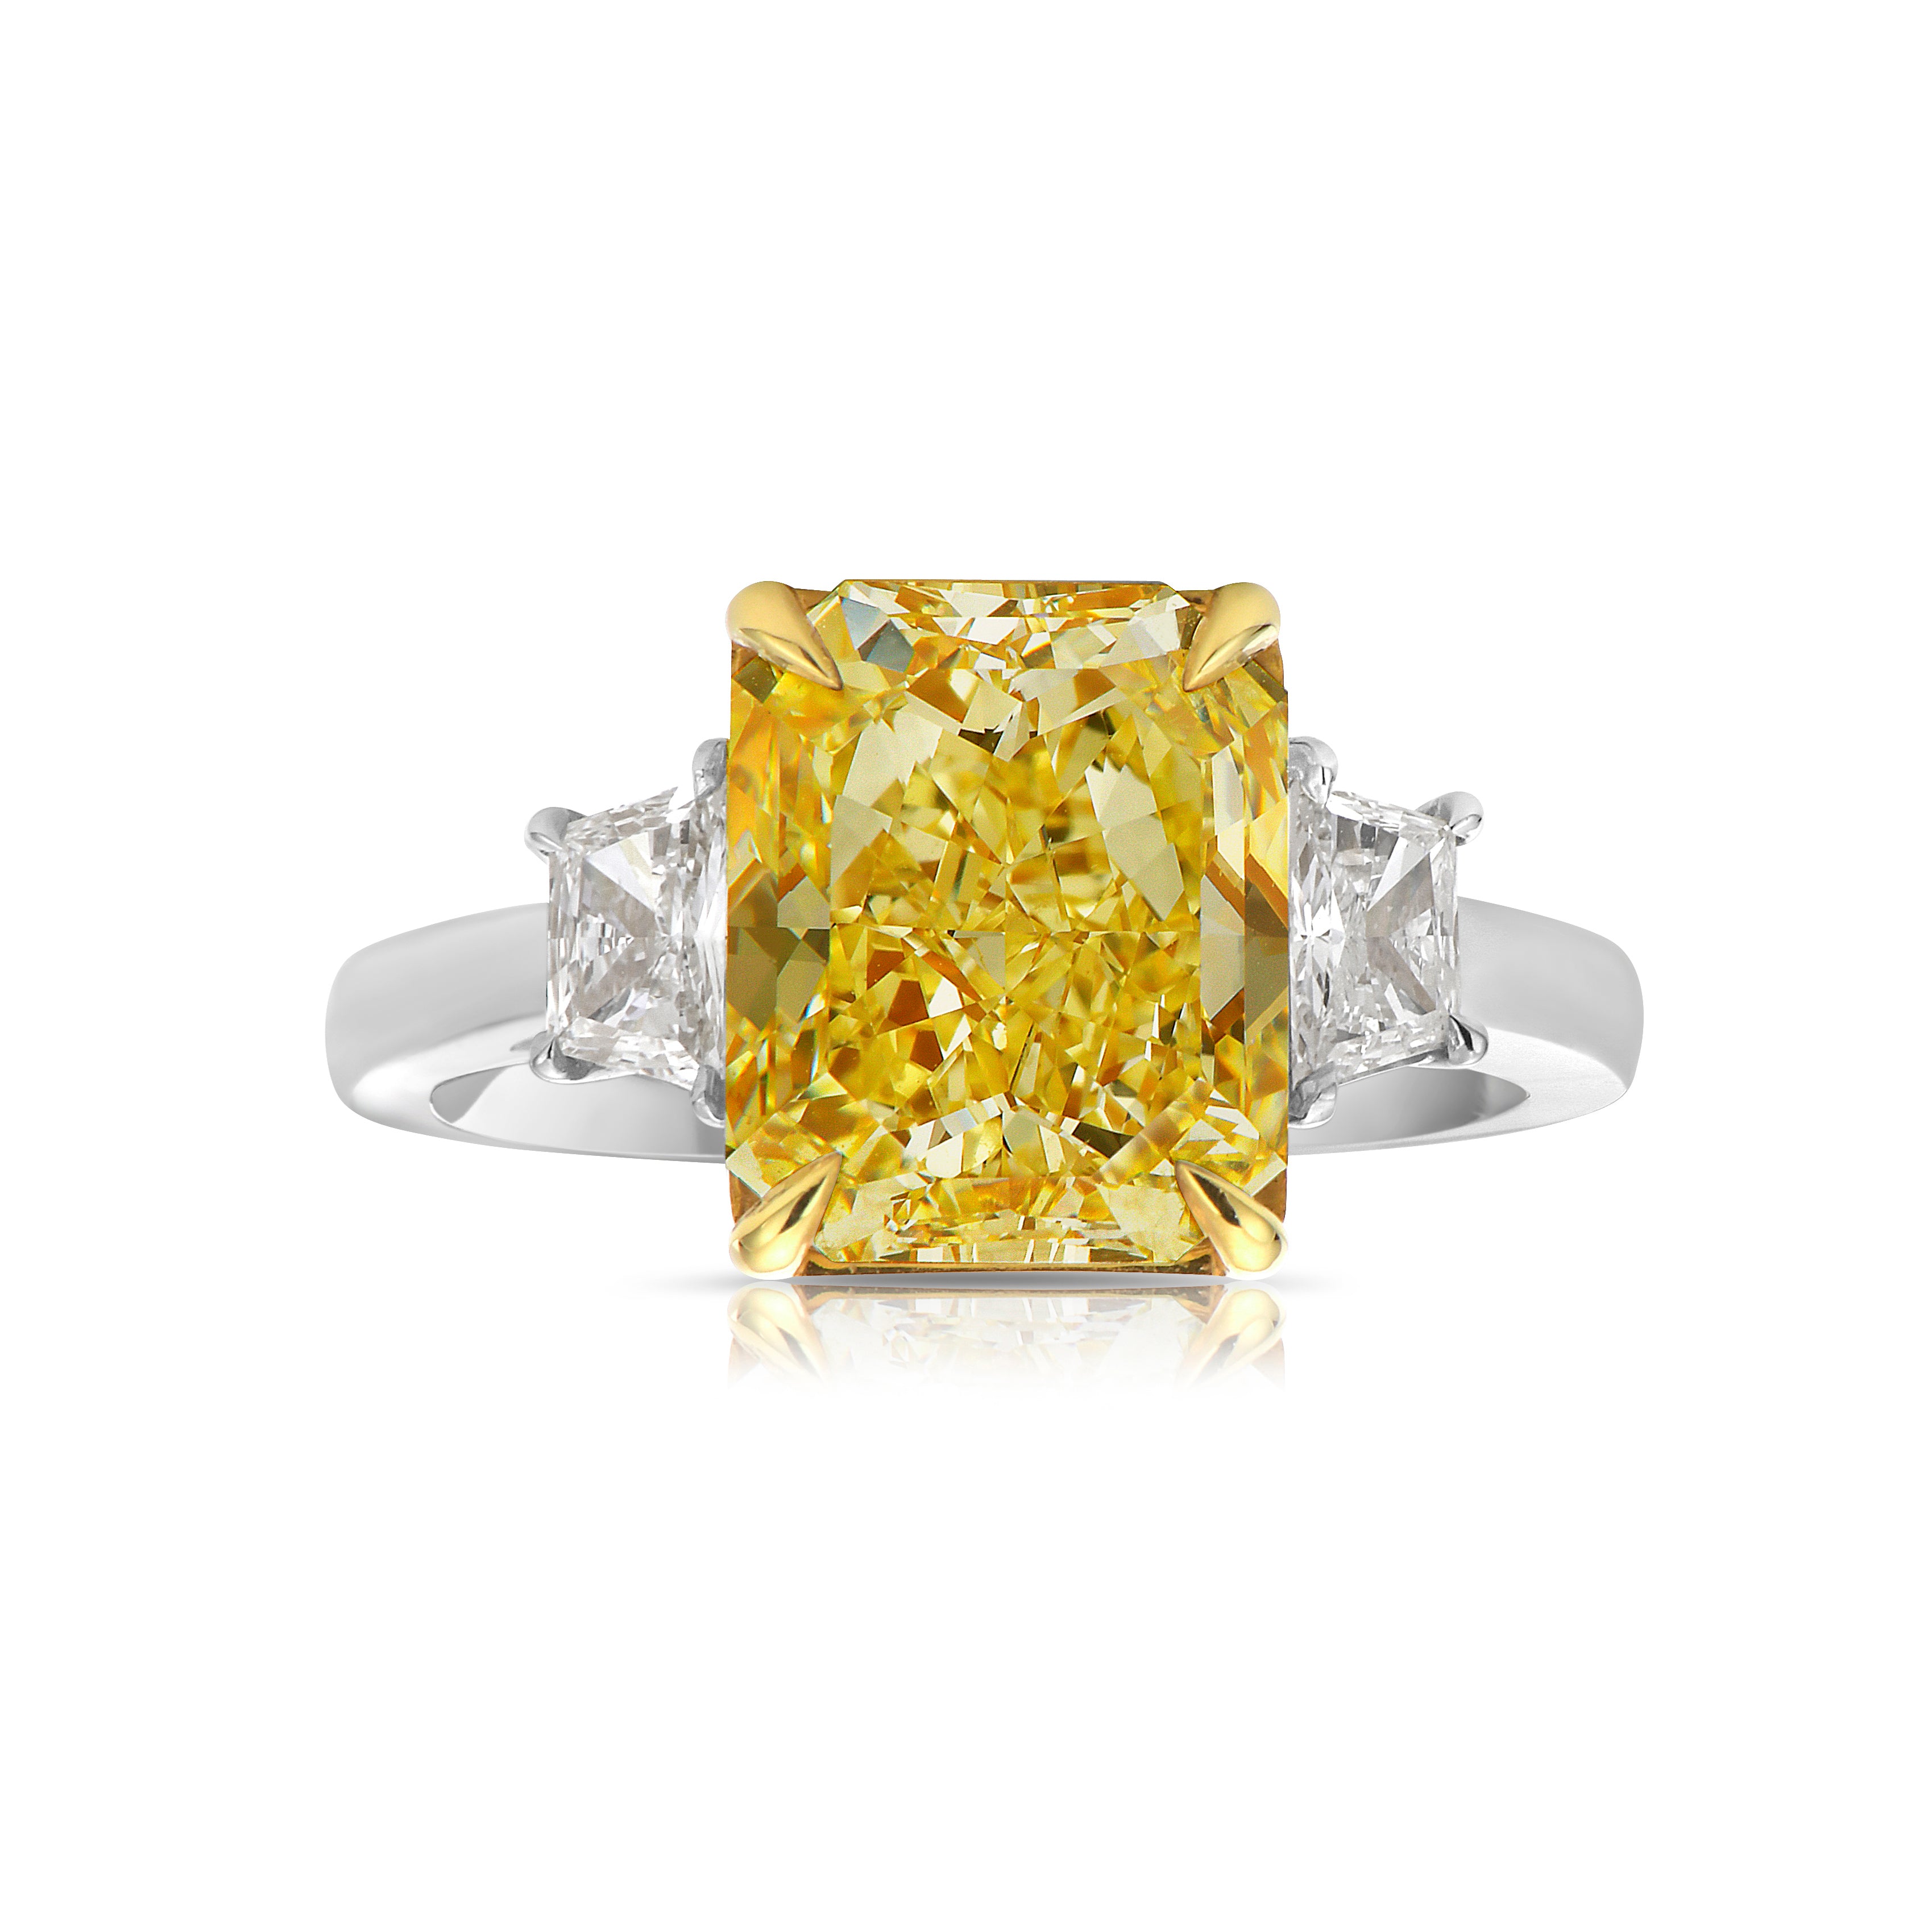 4.08 Carat GIA Fancy Light Yellow Diamond Ring